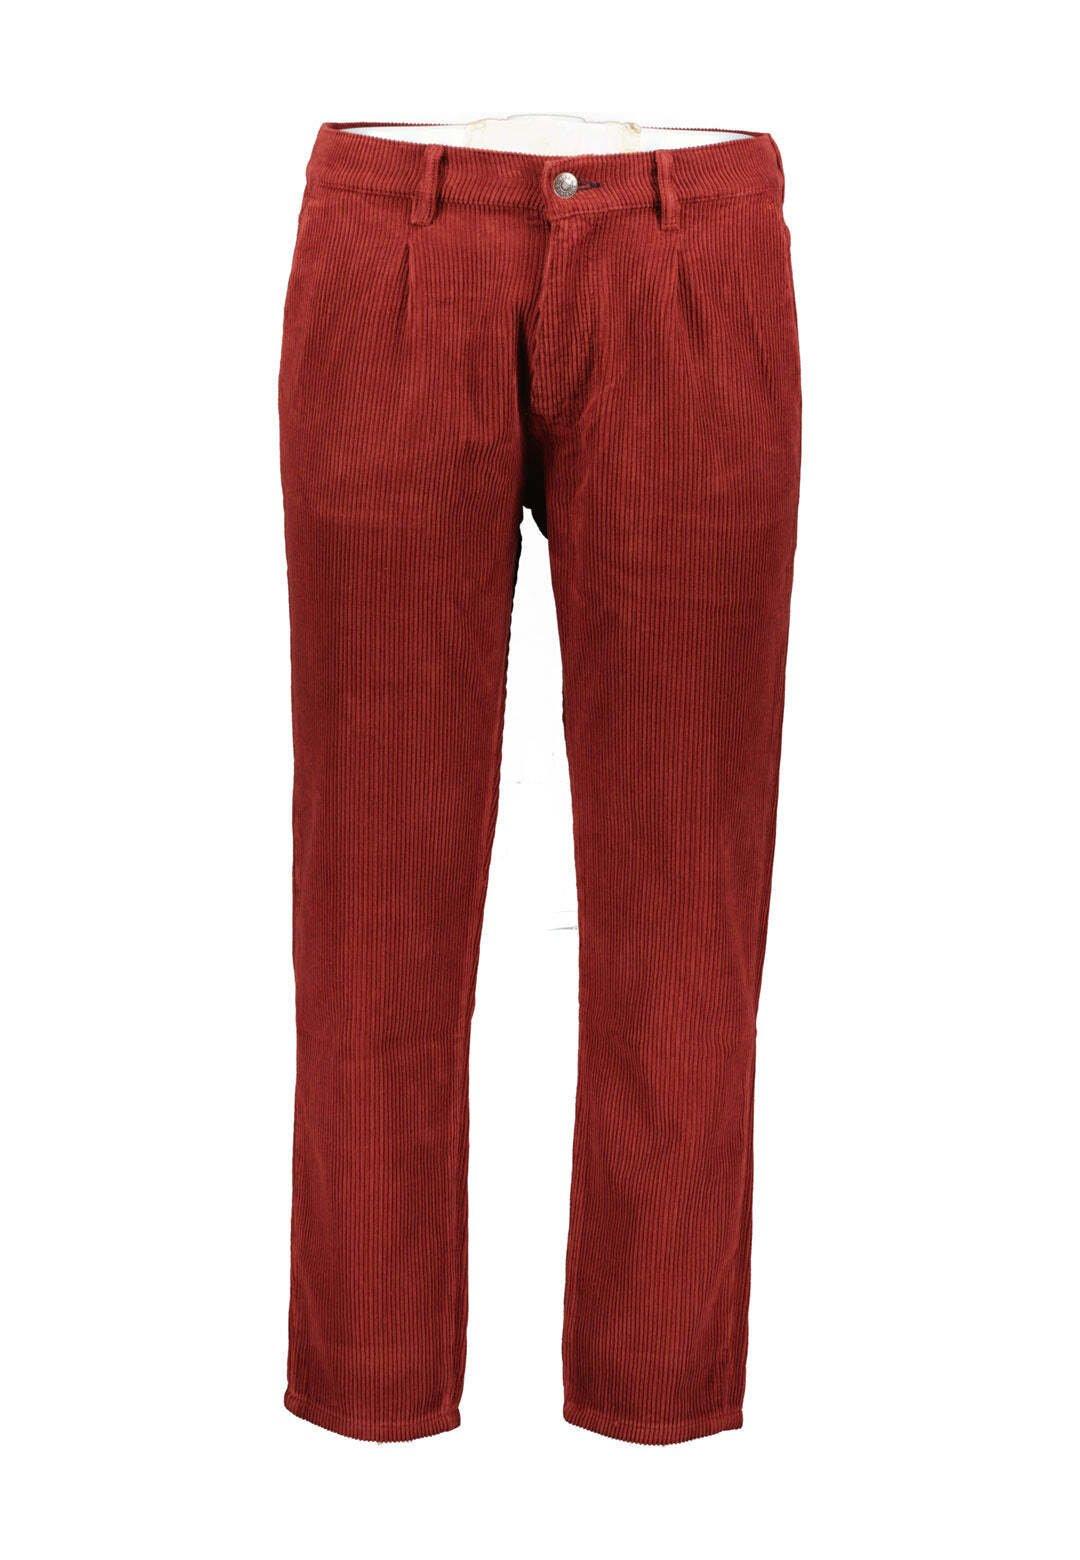 Hosen Pants-corduroy Herren Rot Bunt W32 von Colours & Sons